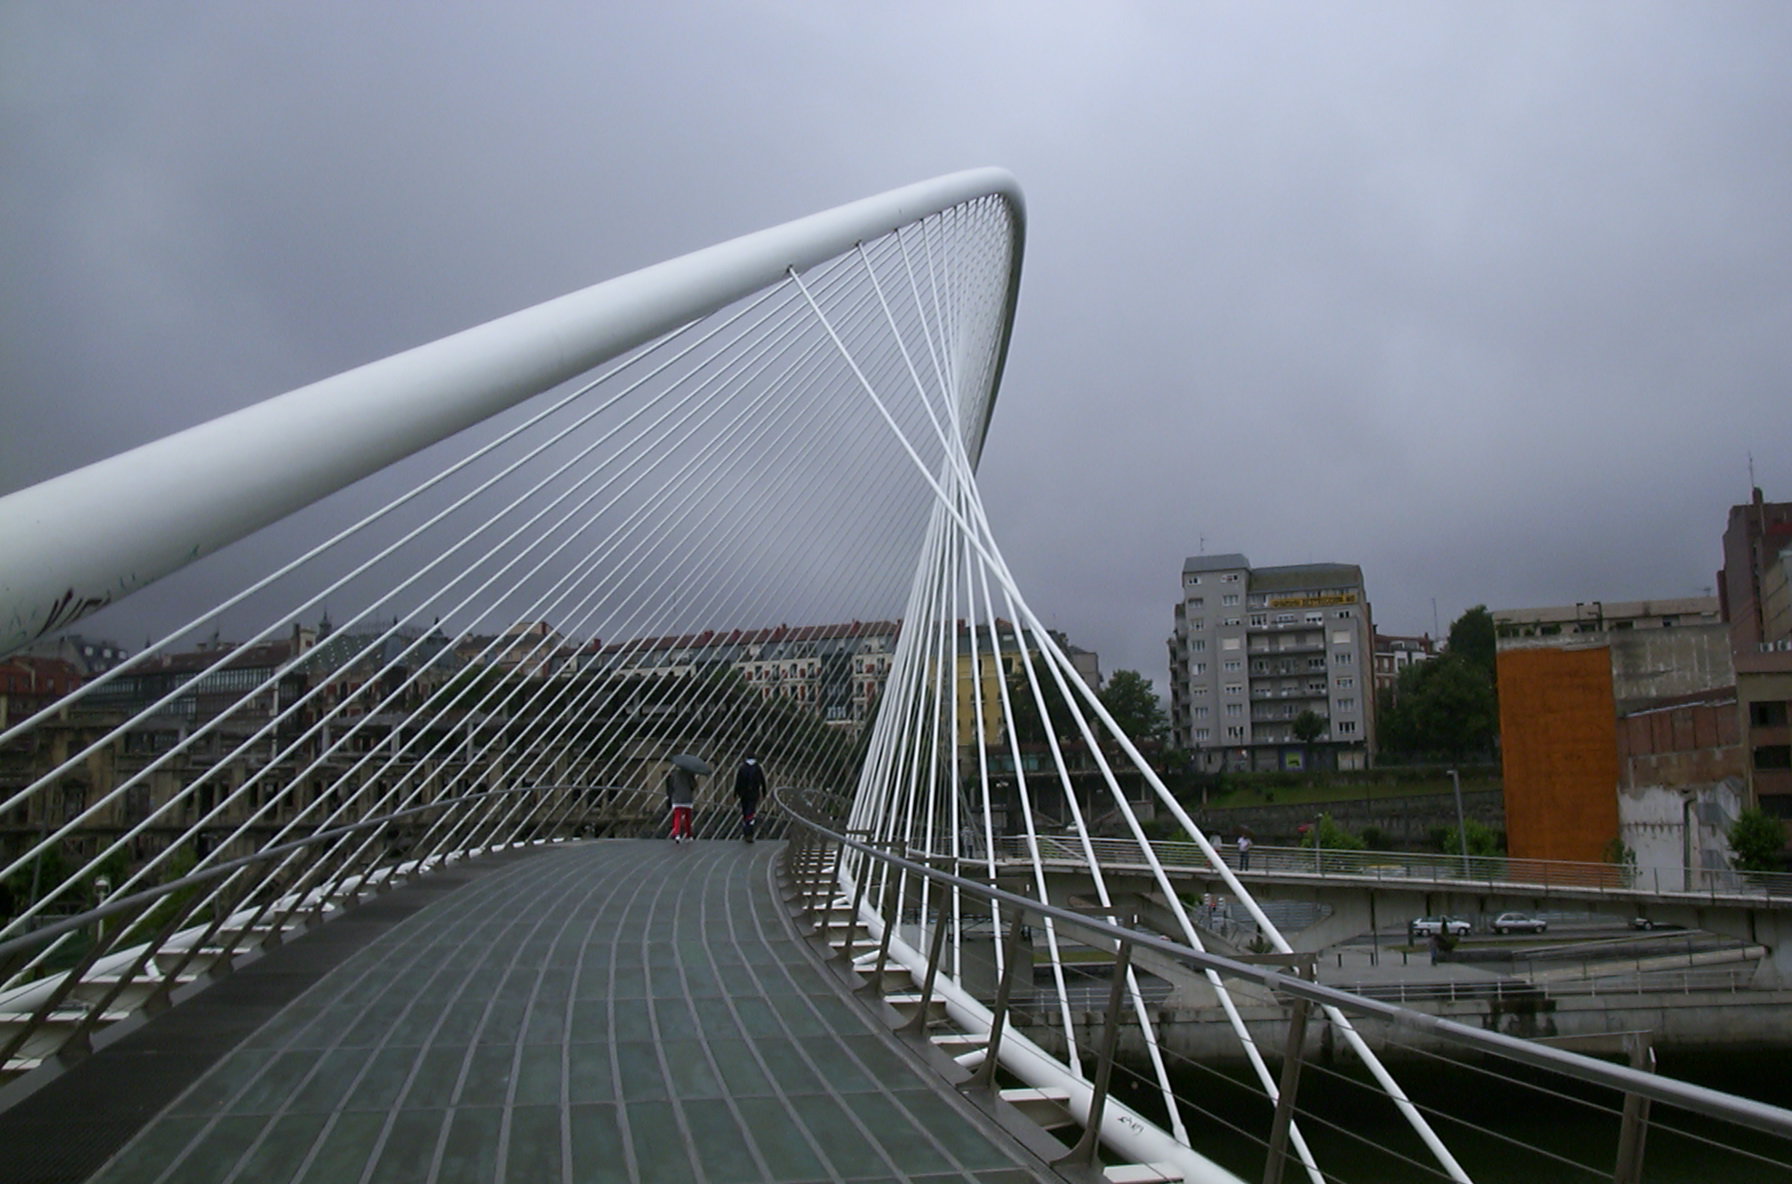 footbridge by calatrava 2 by jori on DeviantArt